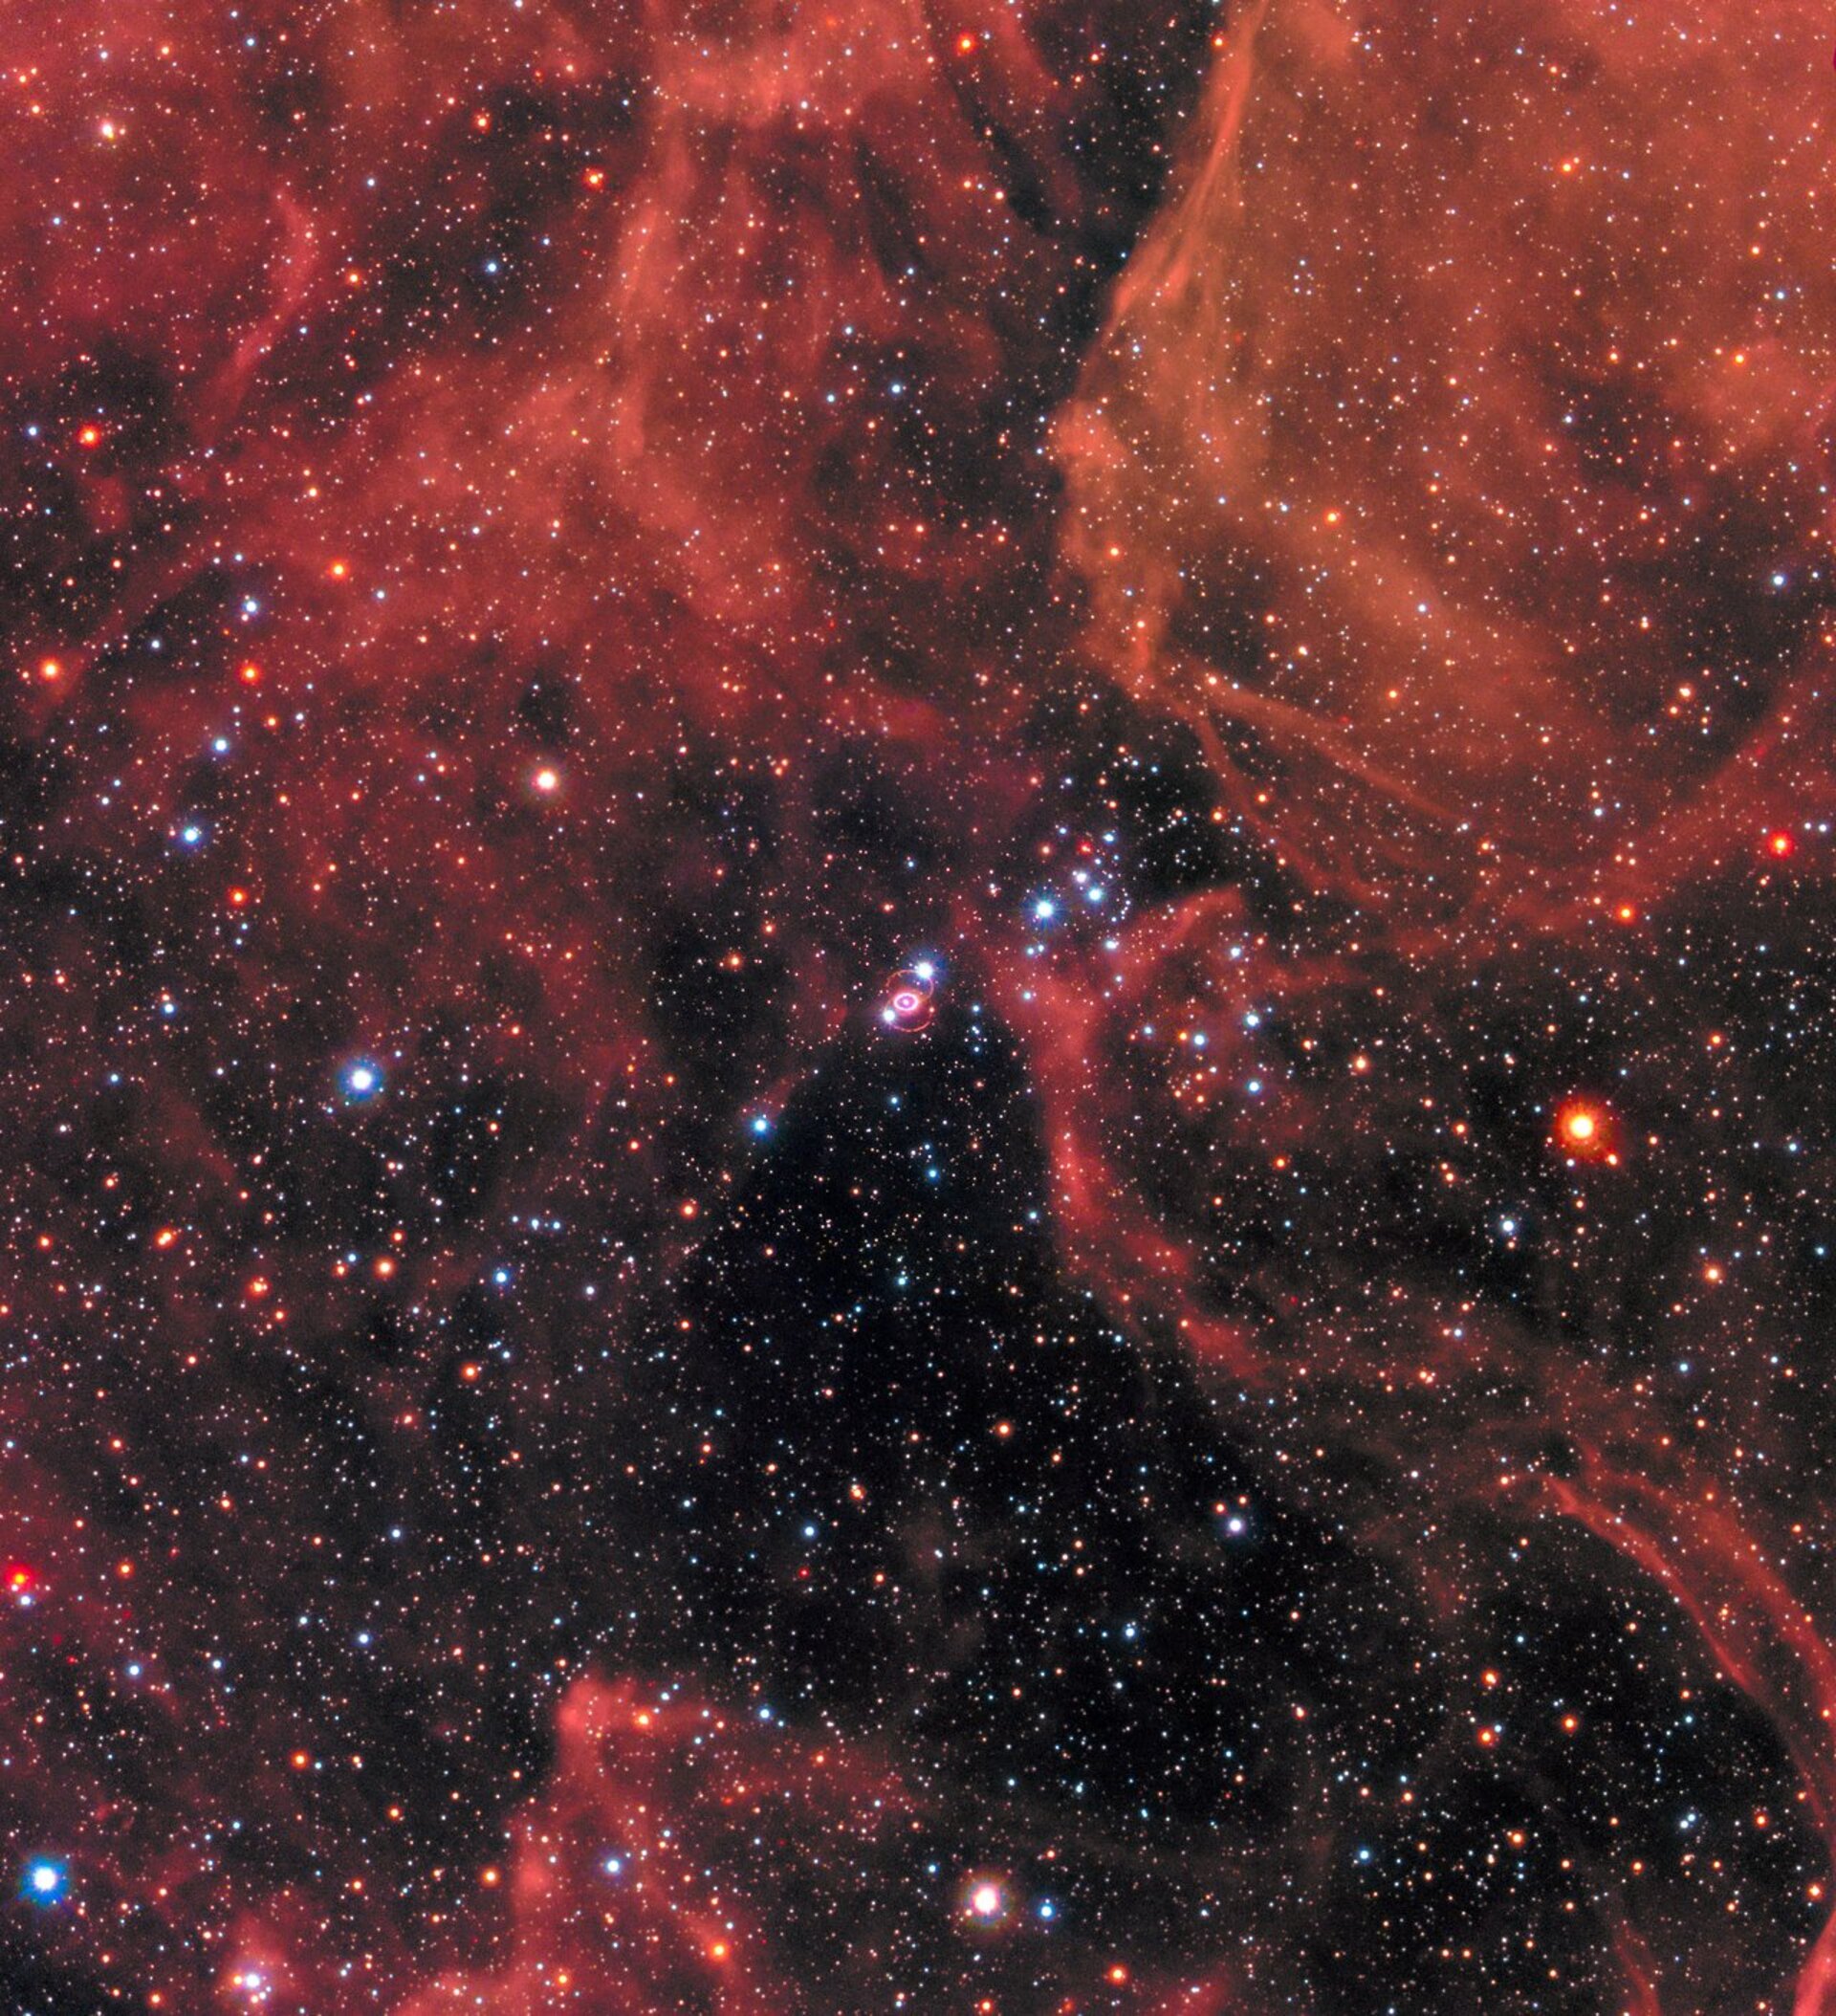 SN 1987A in 2017